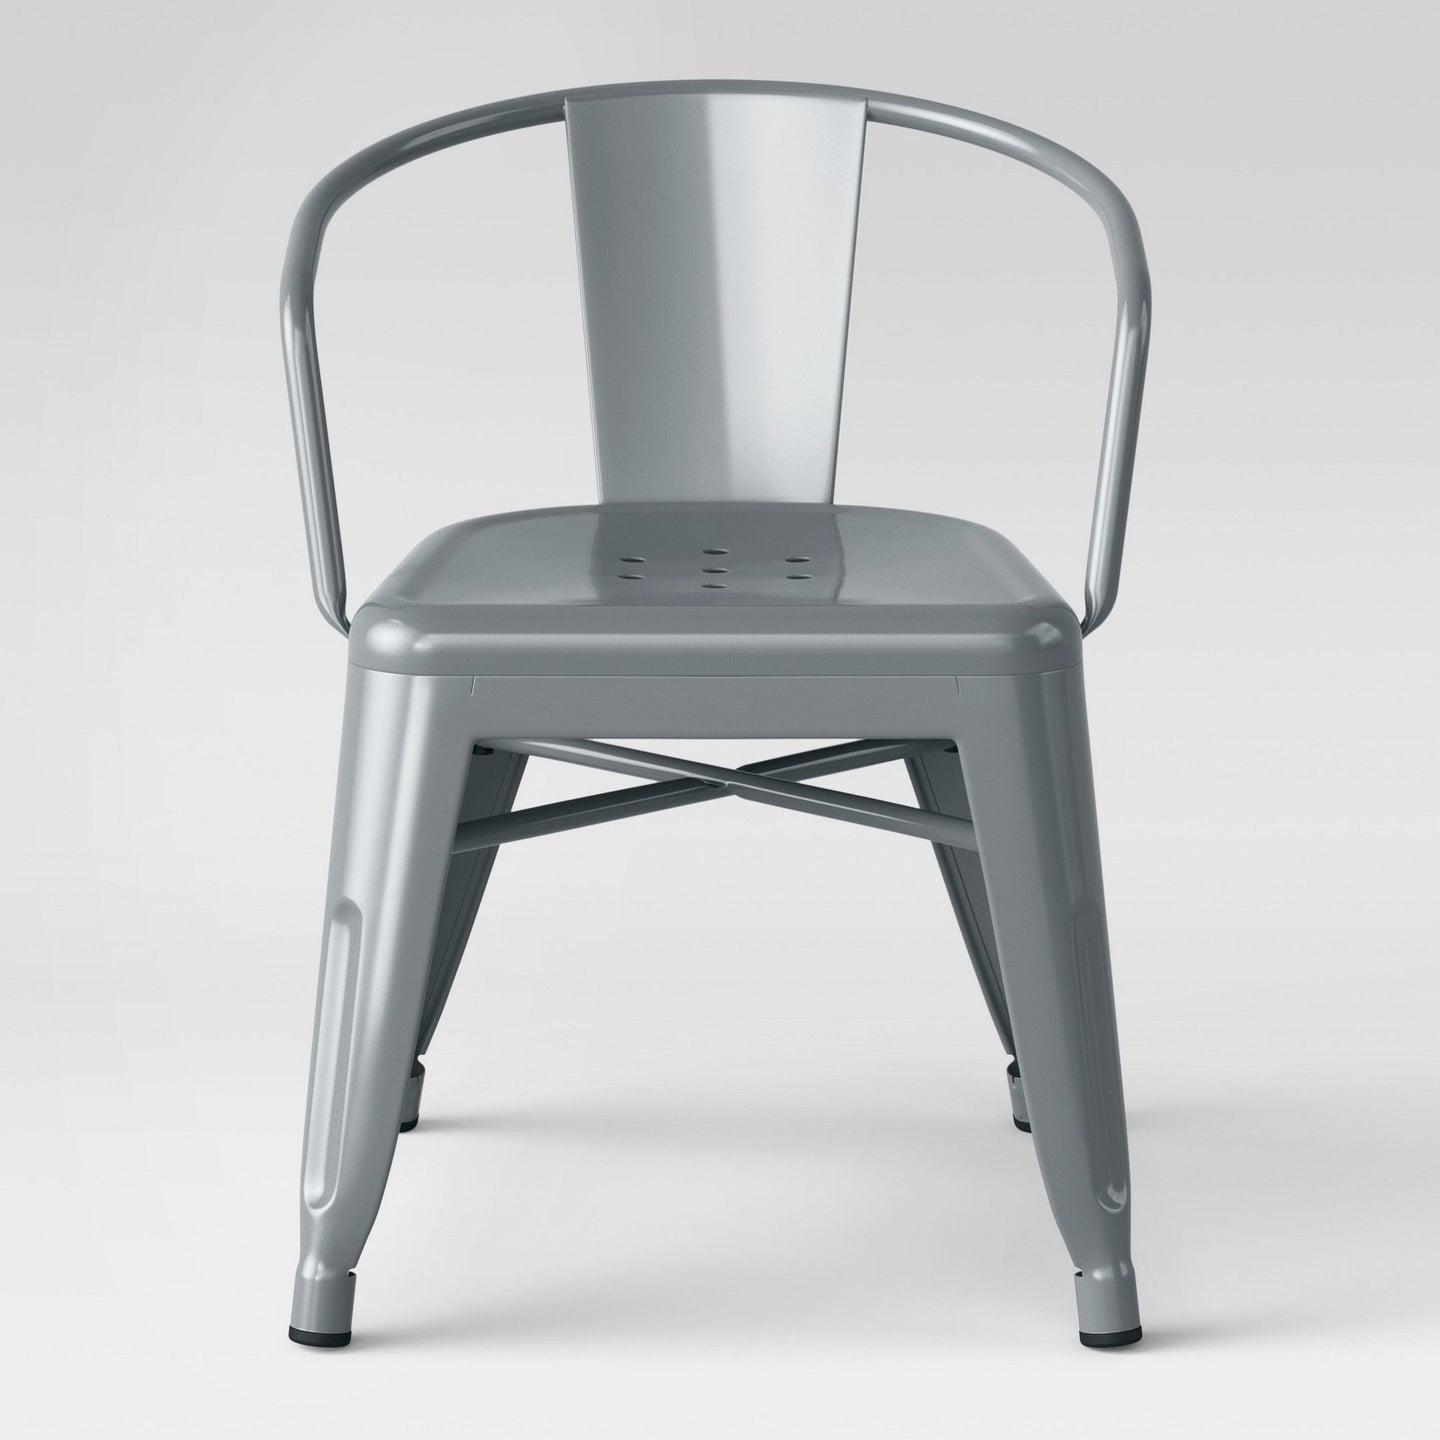 Industrial Activity Chair - Pillowfort, Color: Zig Zag Gray, #6272